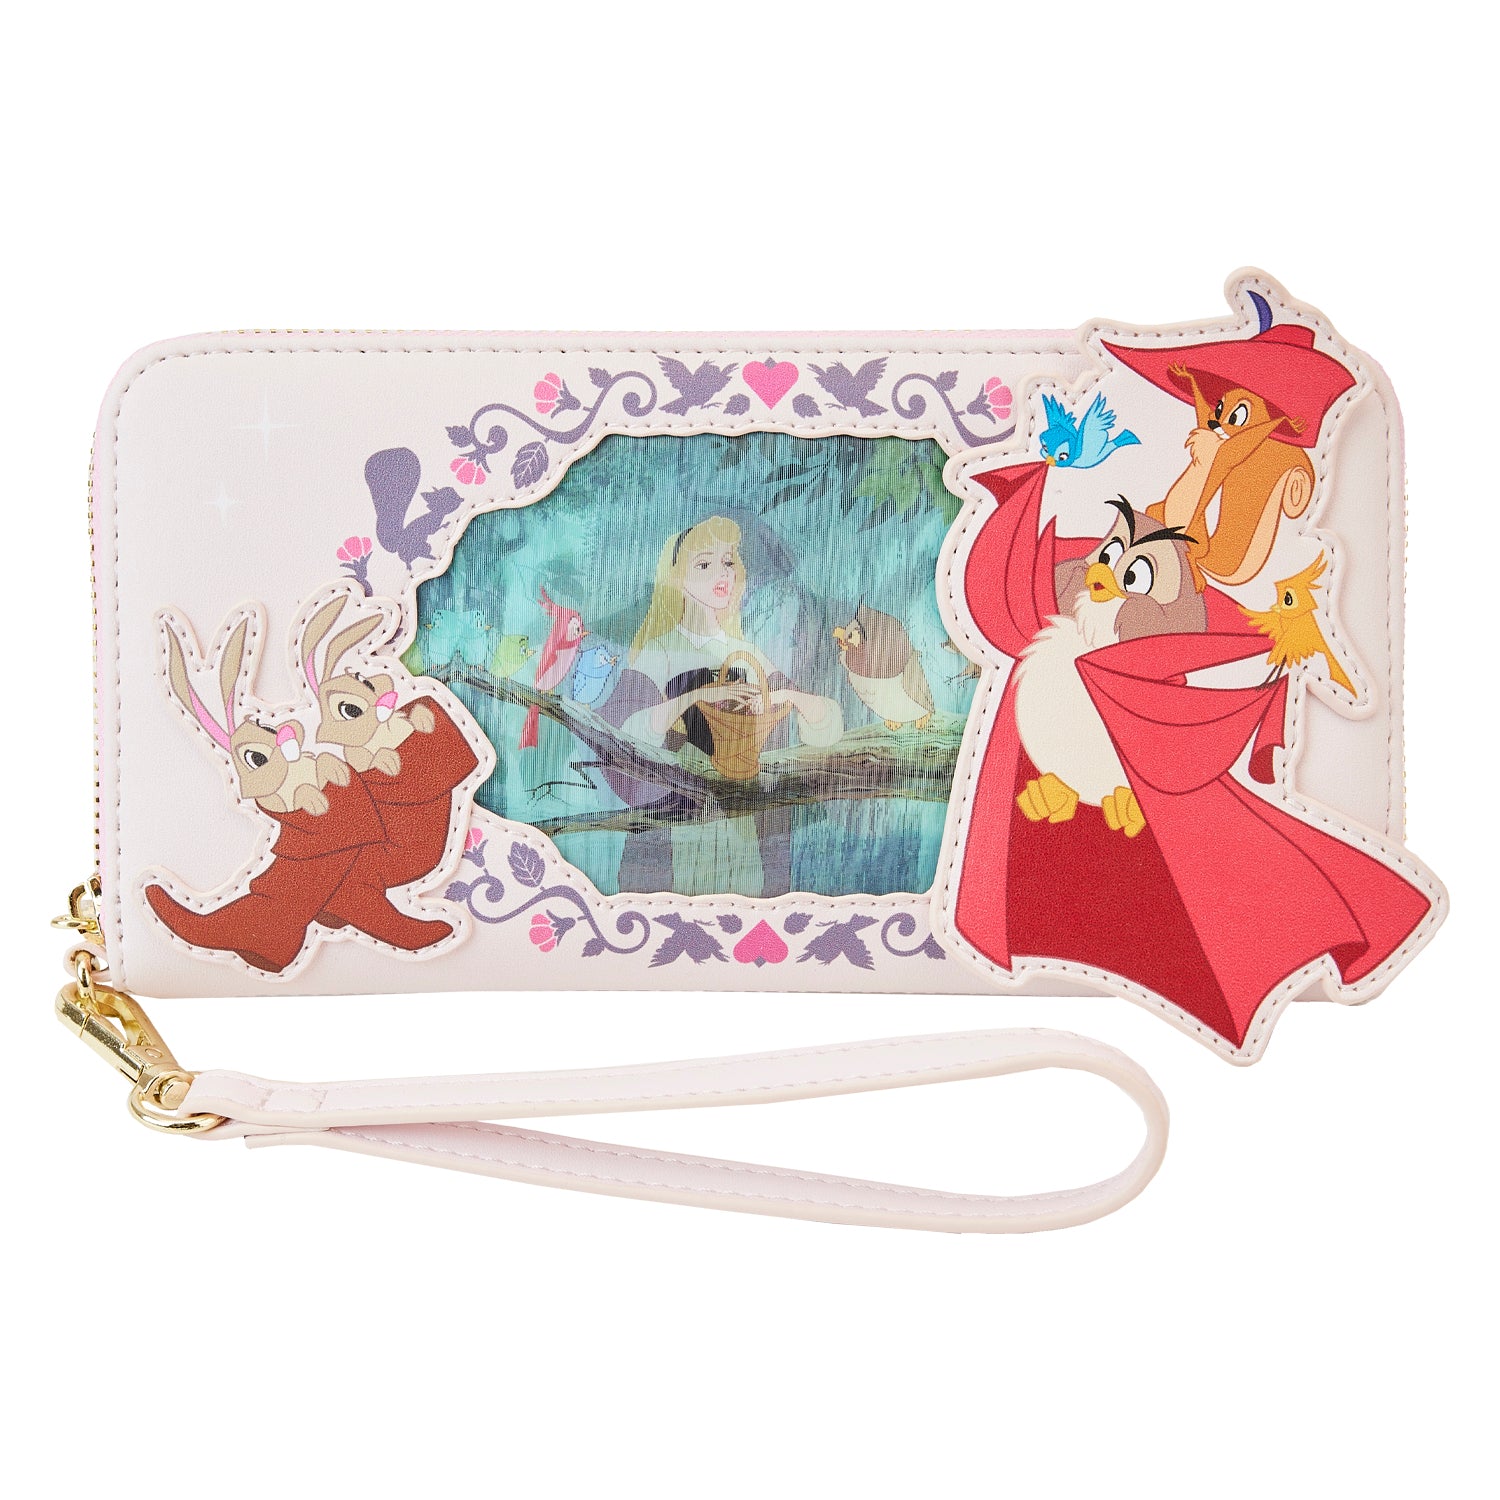 Loungefly Disney Sleeping Beauty Princess Lenticular Mini Backpack